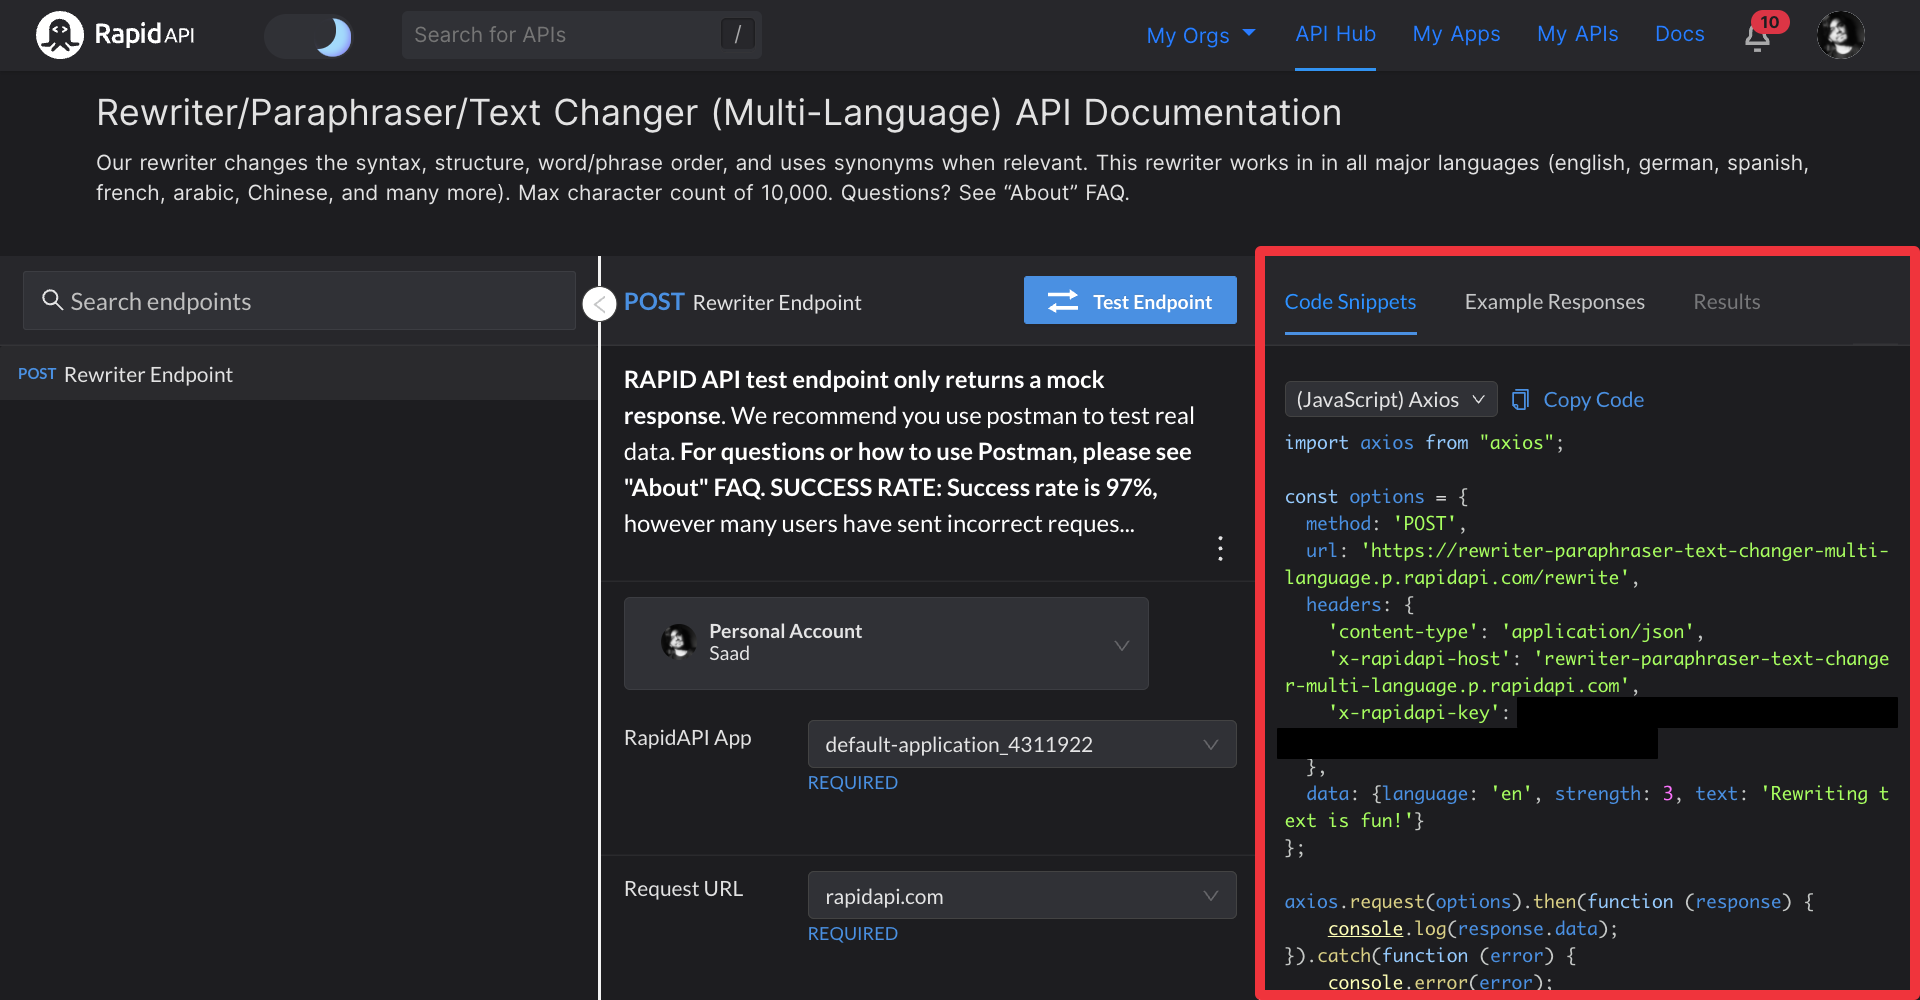 Subscribe to Rewriter/Paraphraser/Text Changer (Multi-Language) API